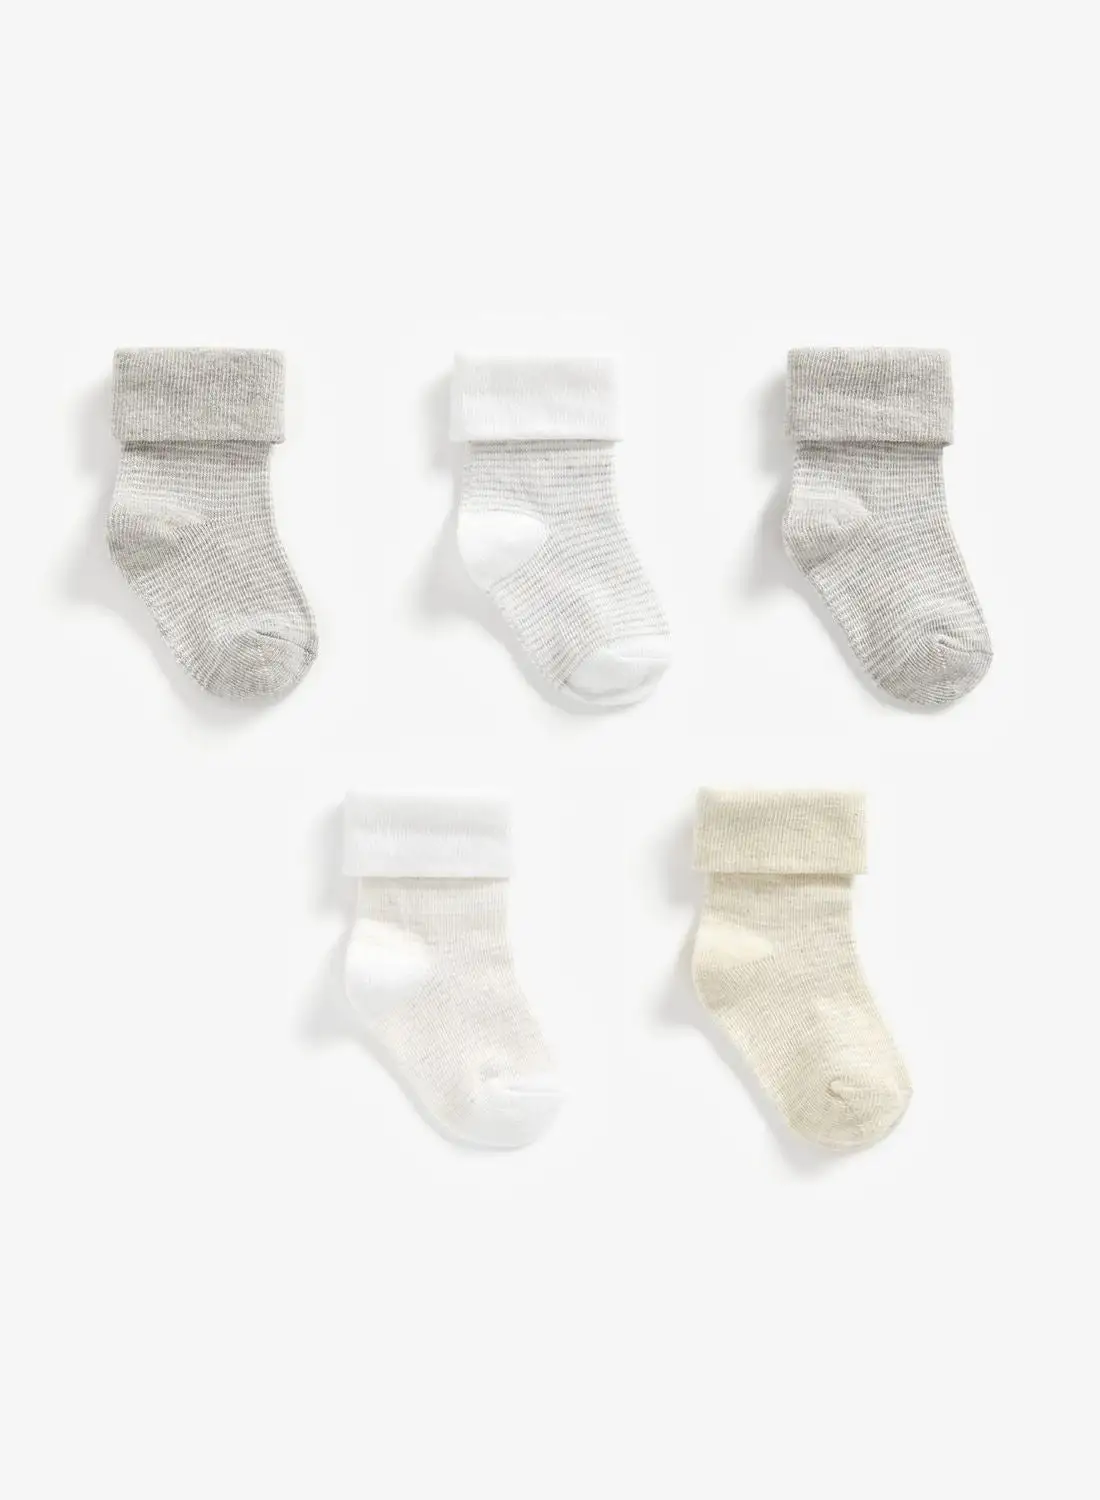 mothercare Infant 5 Pack Assorted Socks